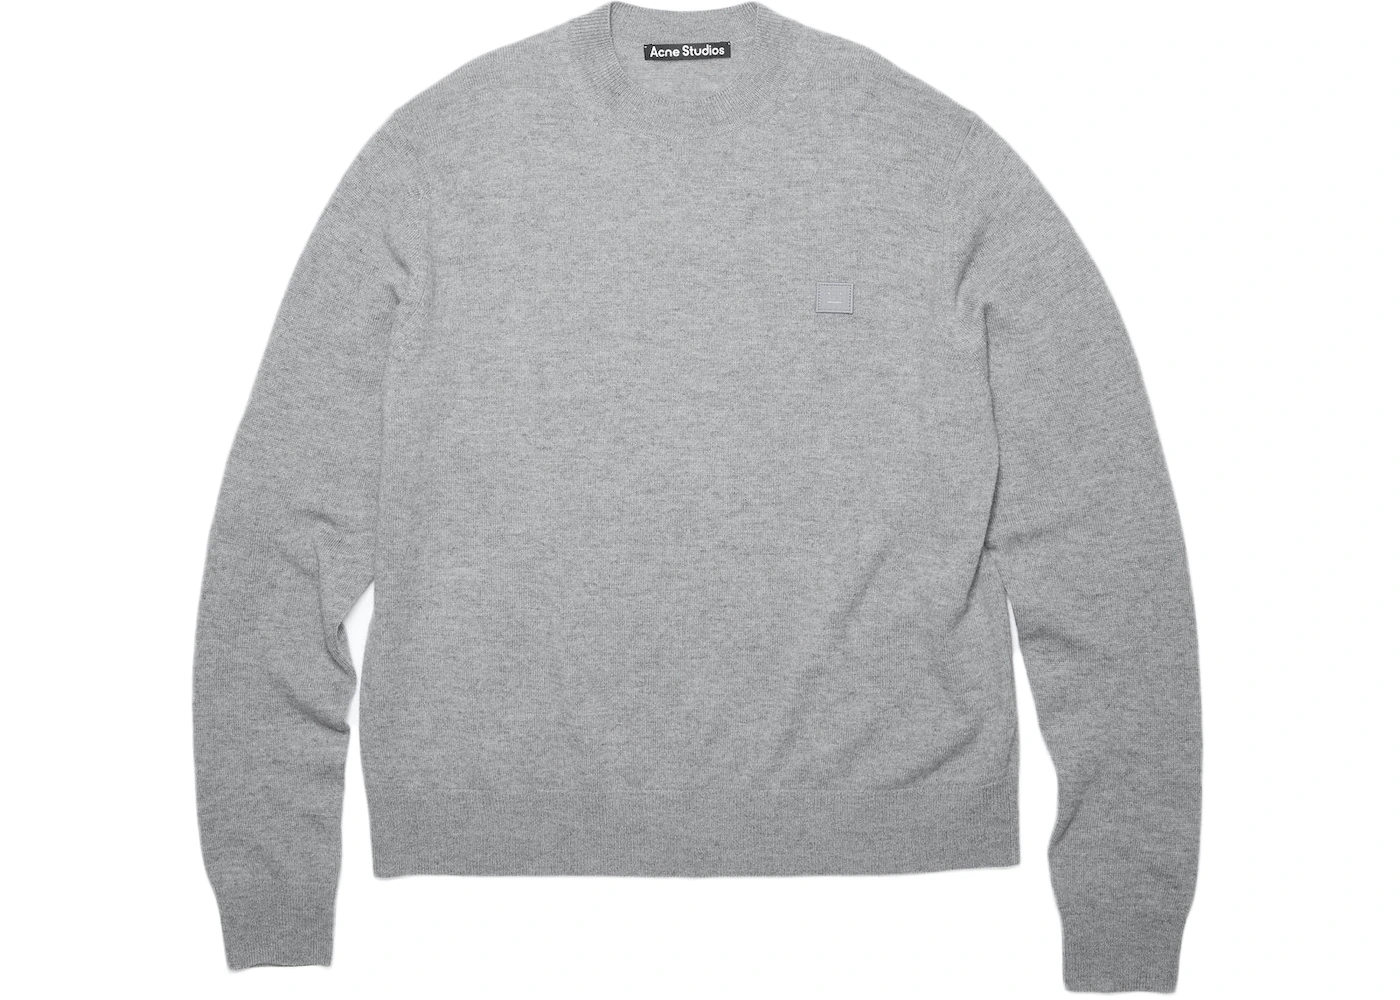 fiktiv Visne Hofte Acne Studios Lightweight Wool Face Patch Crewneck Sweater Grey Melange  Men's - US